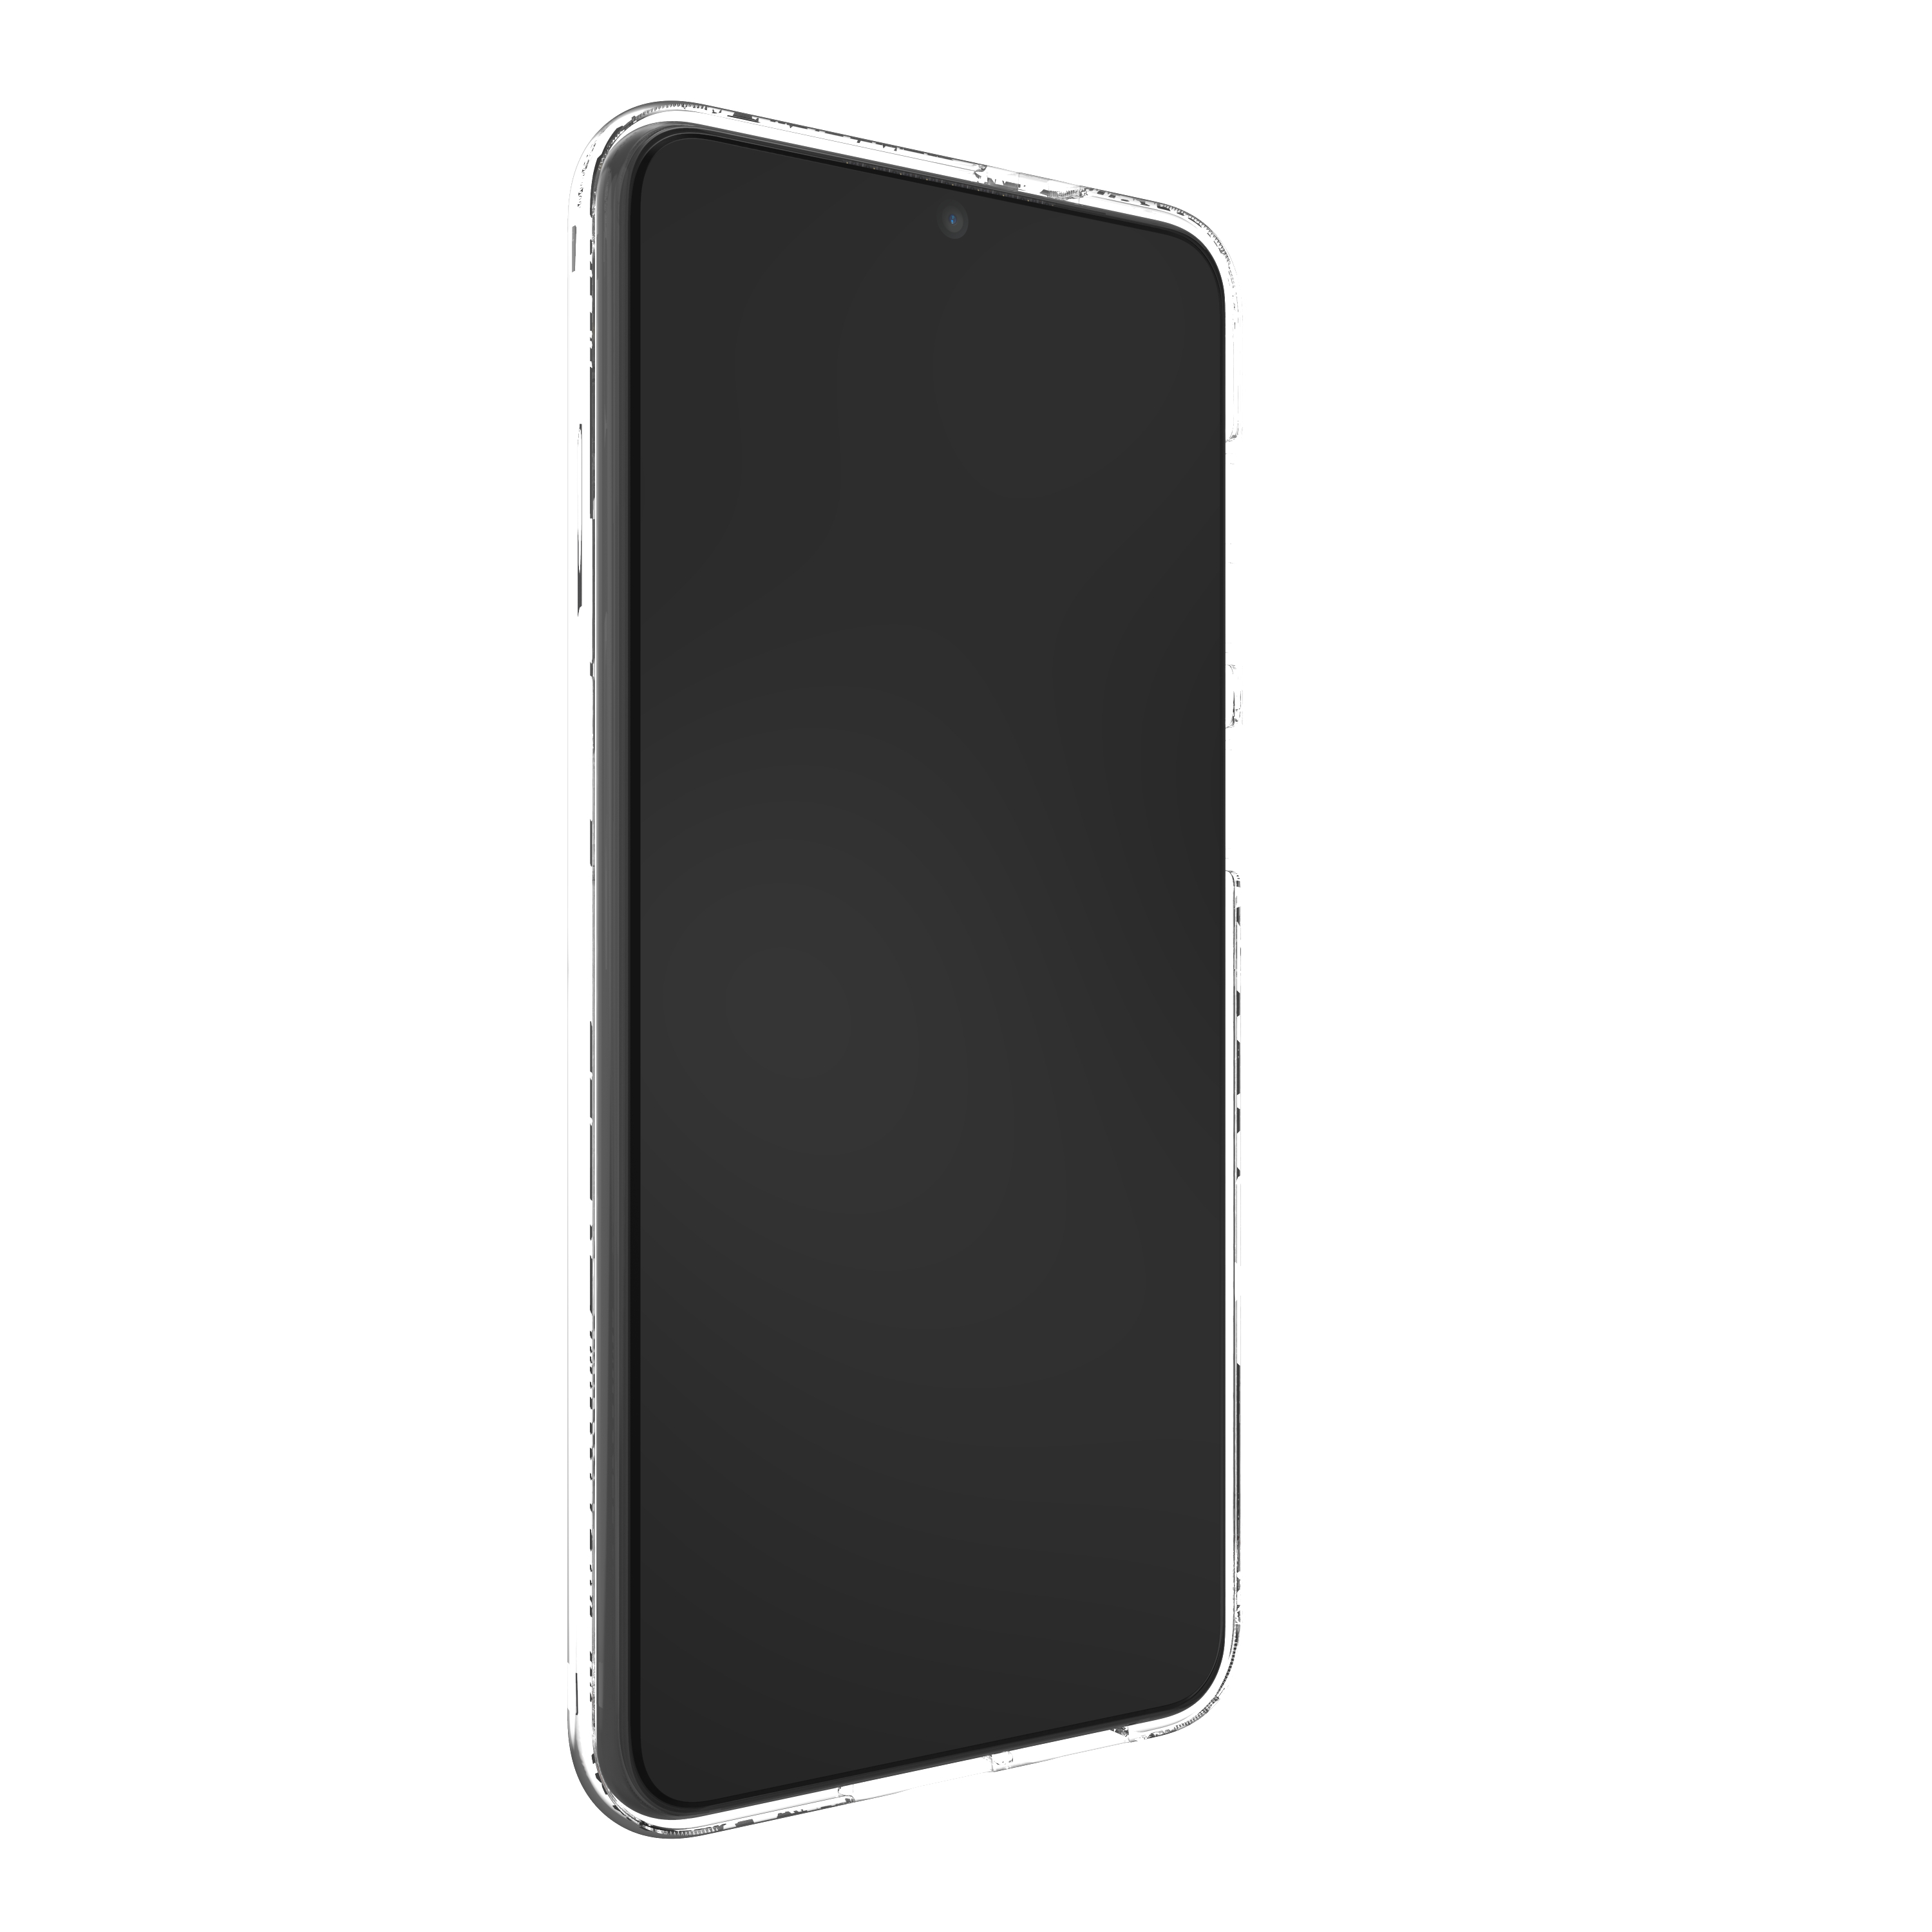 Samsung, D3O Backcover, GEAR4 Crystal Palace, Transparent Galaxy S21+,